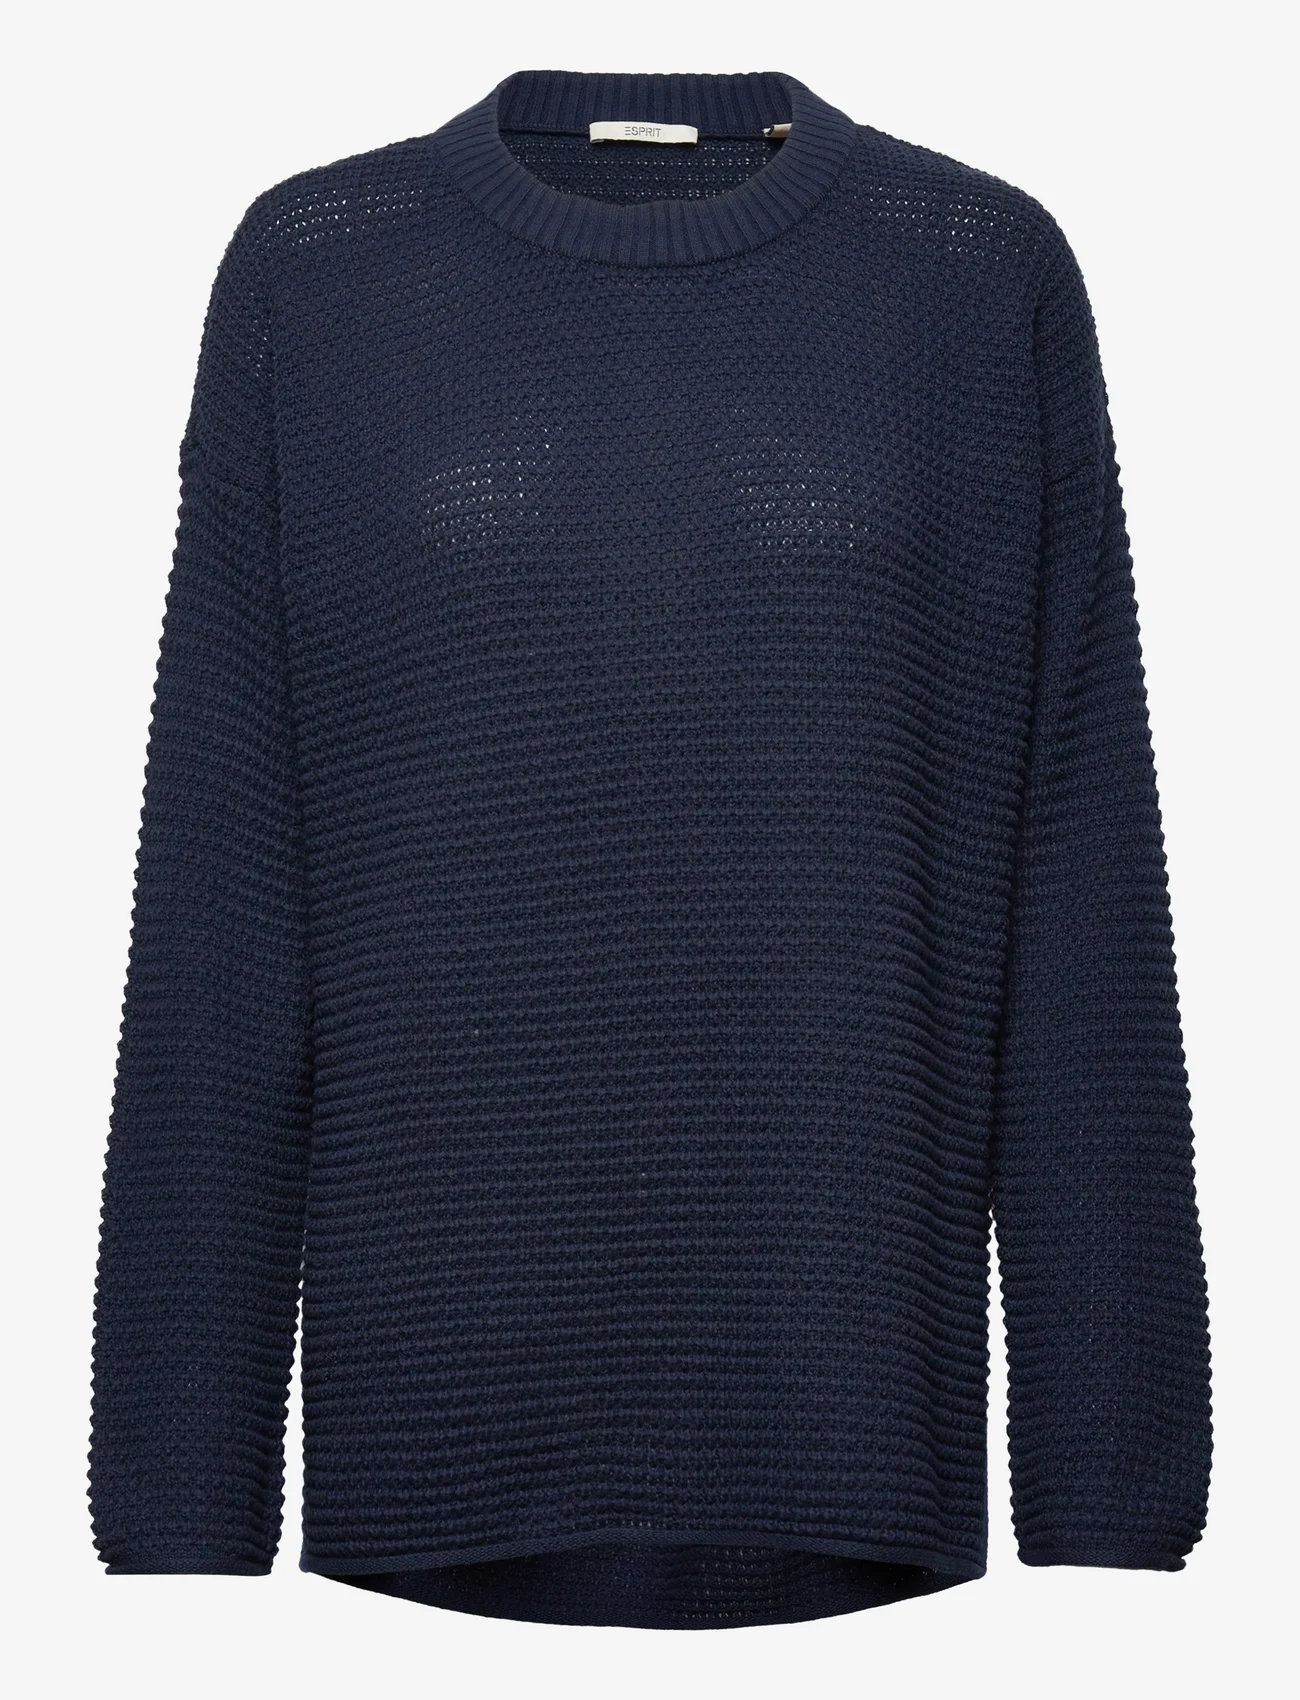 Esprit Casual - Textured knitted jumper - preisparty - navy - 0